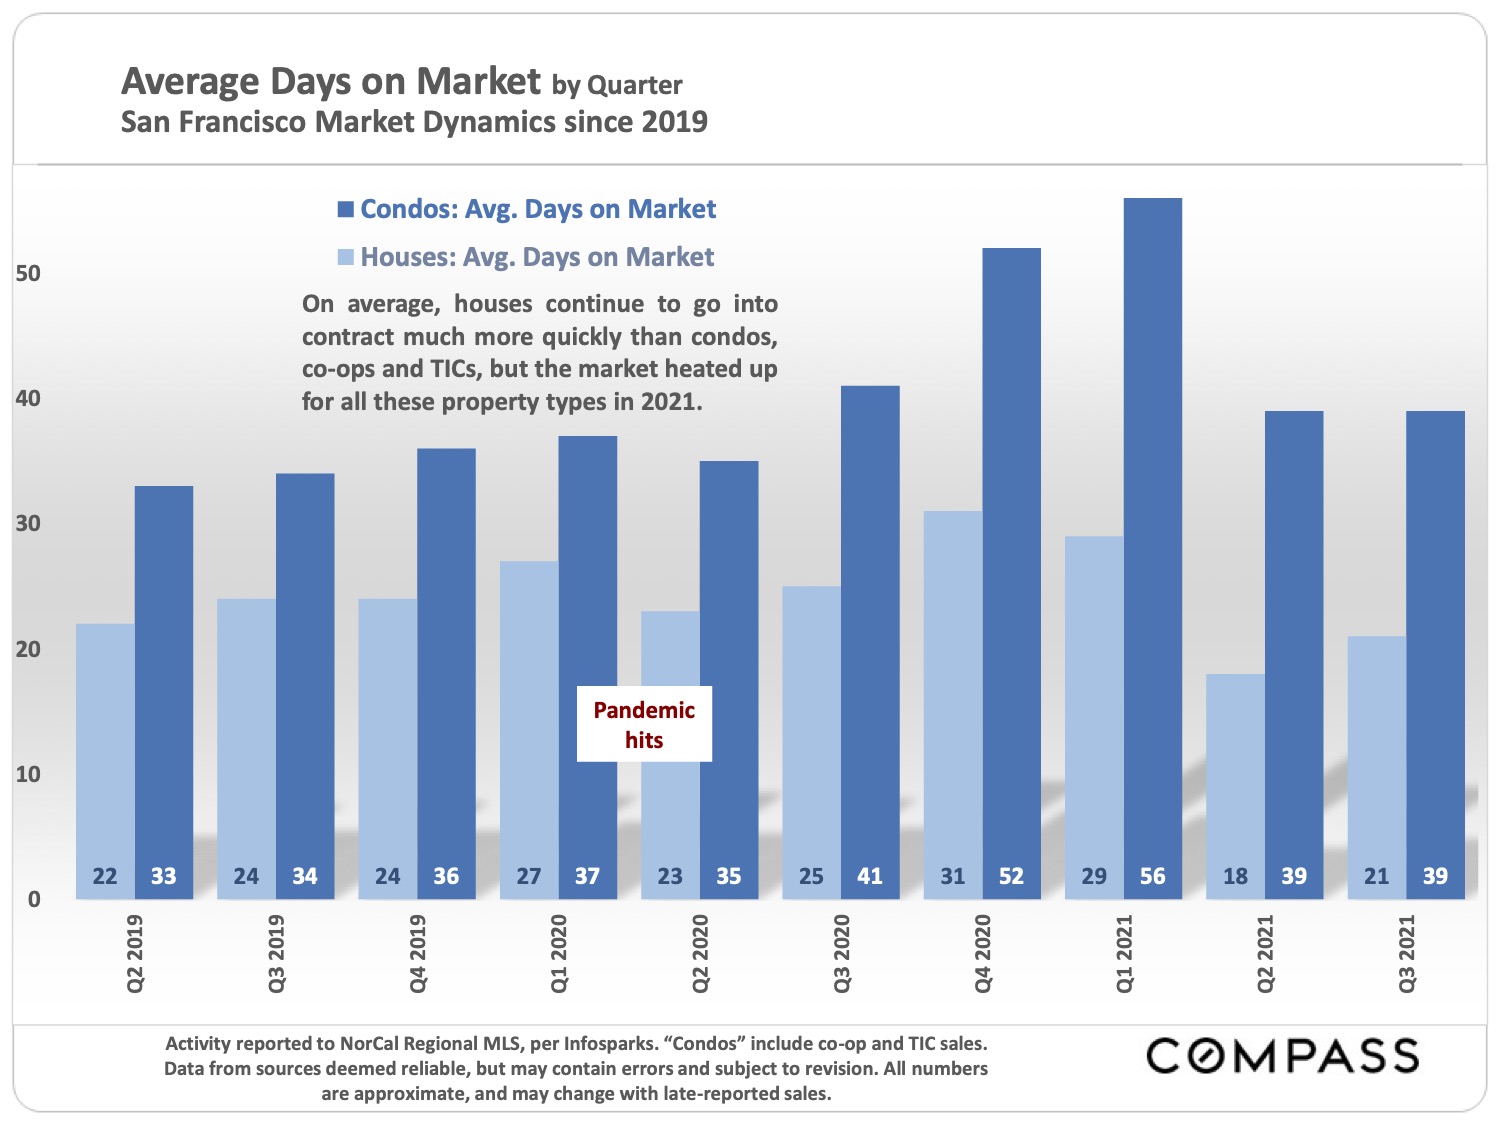 Average Days on Market by Quarter - San Francisco Market Dynamics Since 2019